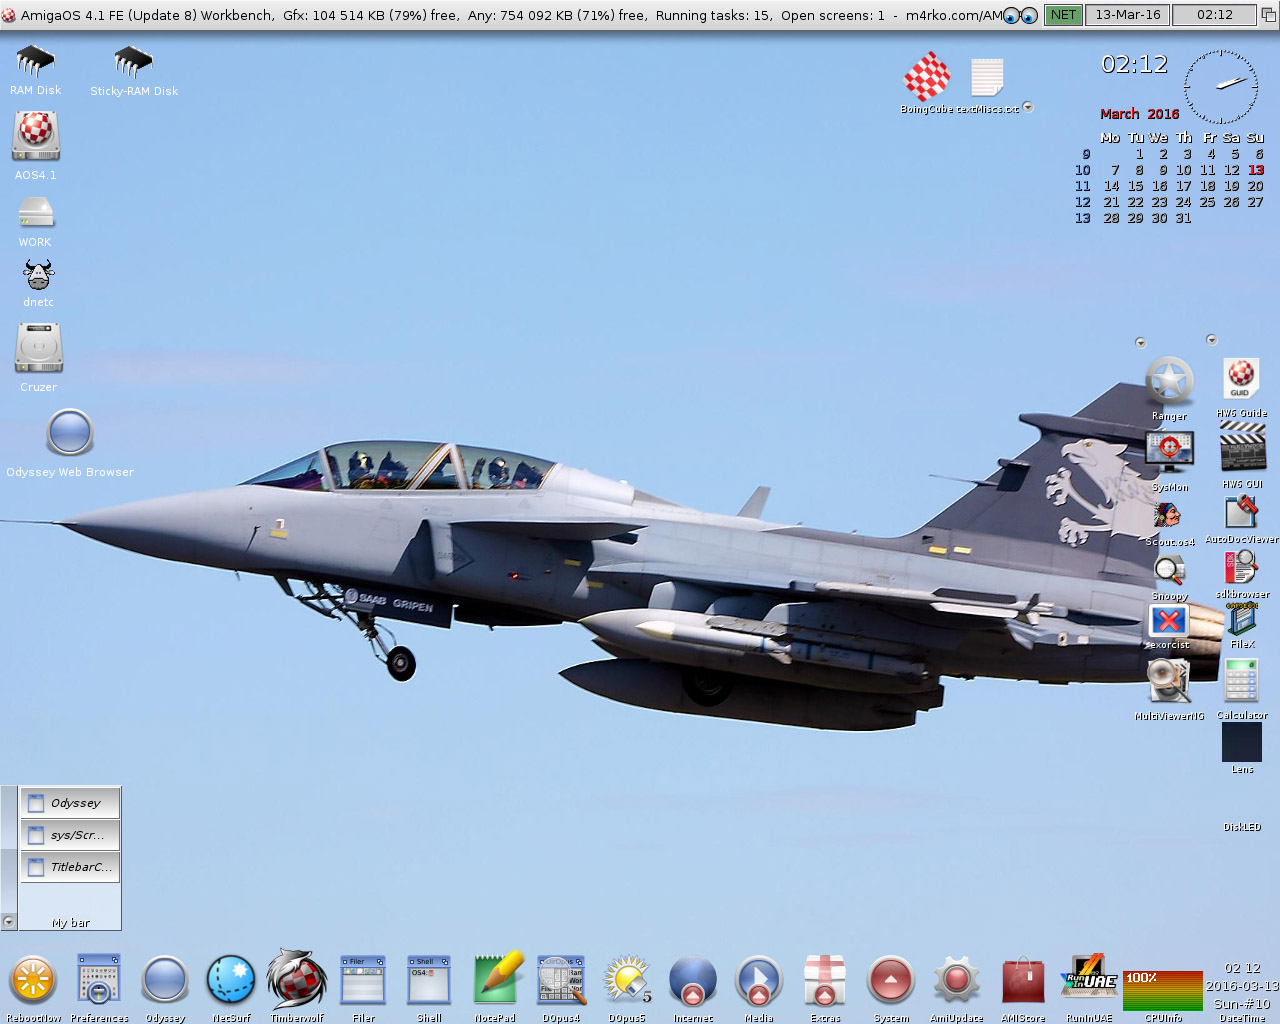 AmigaOS 4.1 FE Workbench with JAS 39 Gripen backdrop